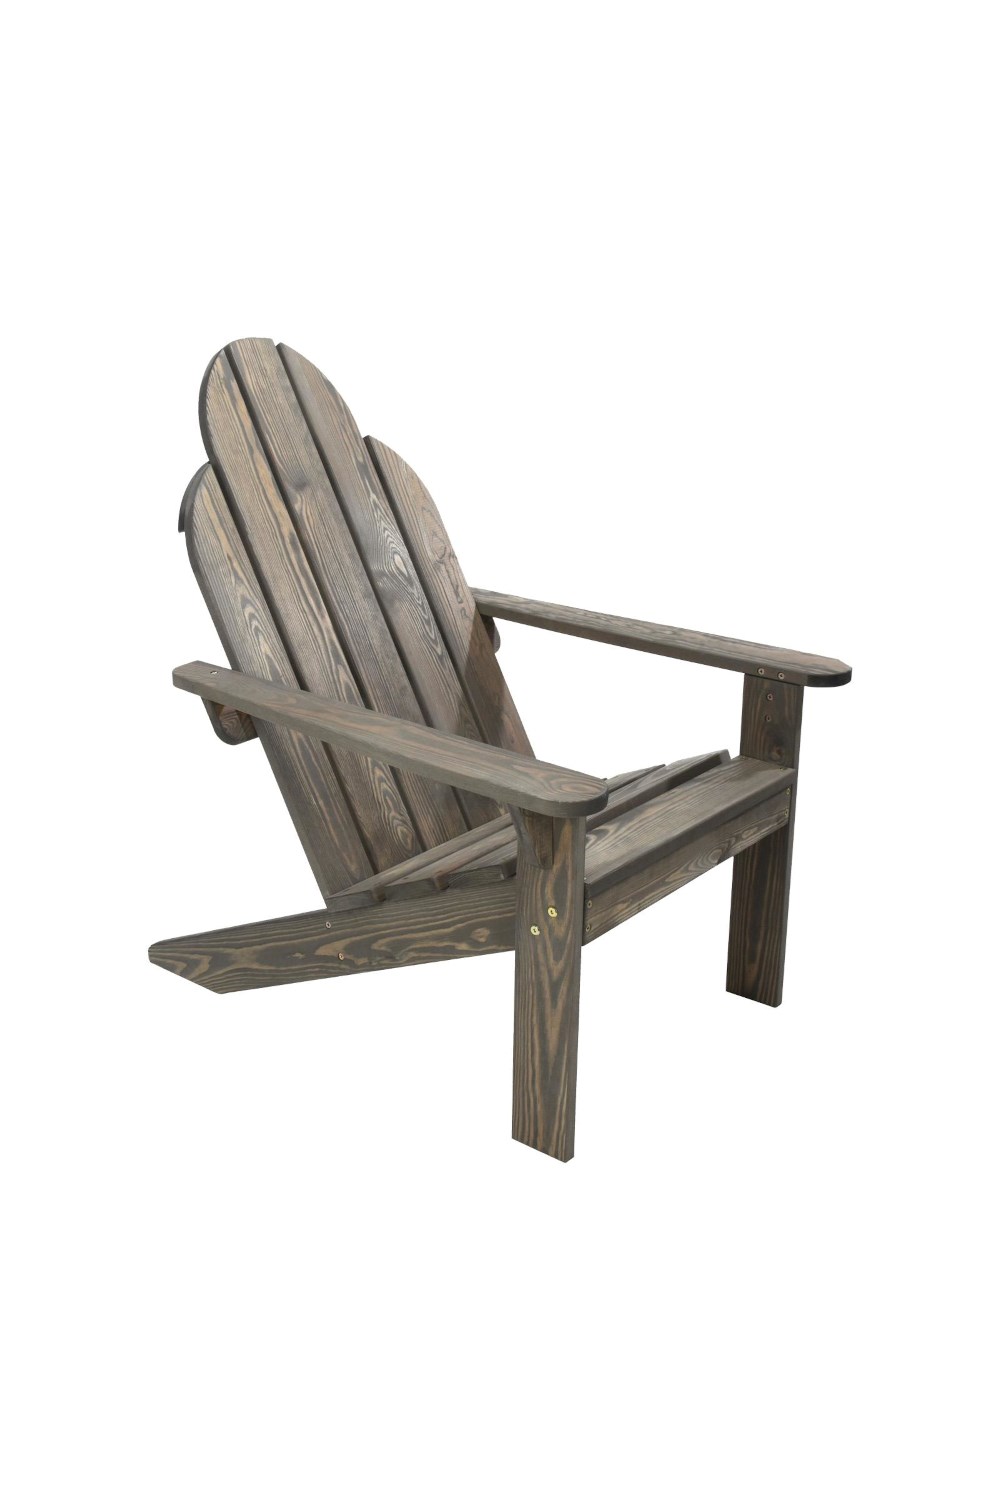 Adirondack Chair Sun Lounger Garden Furniture -